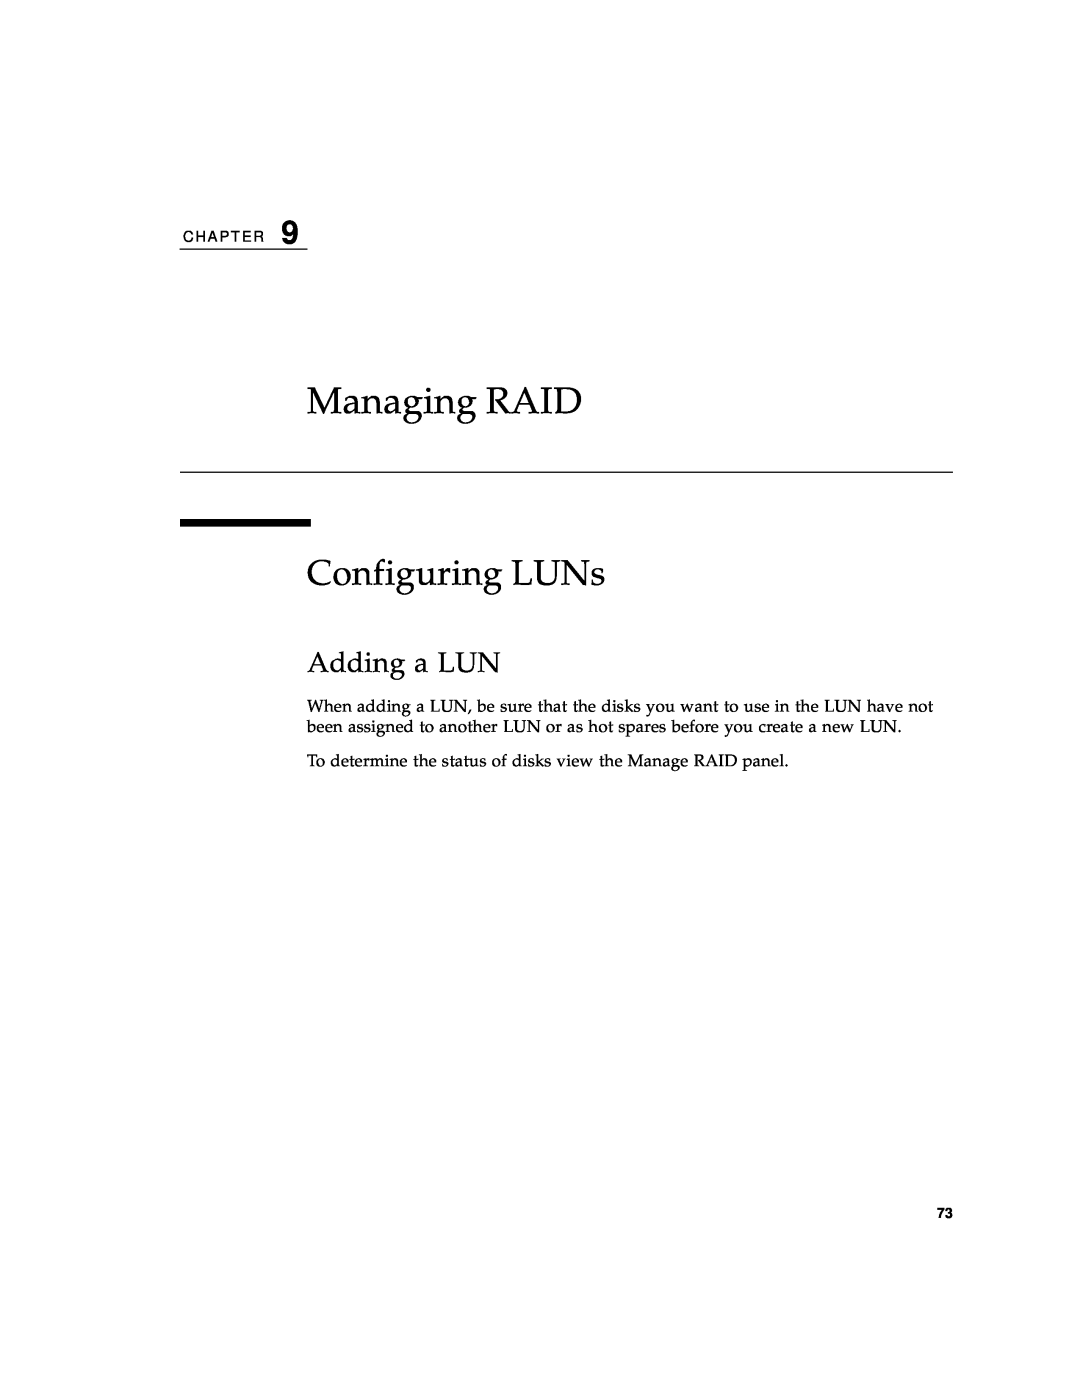 Sun Microsystems 5210 NAS manual Managing RAID, Configuring LUNs, Adding a LUN 